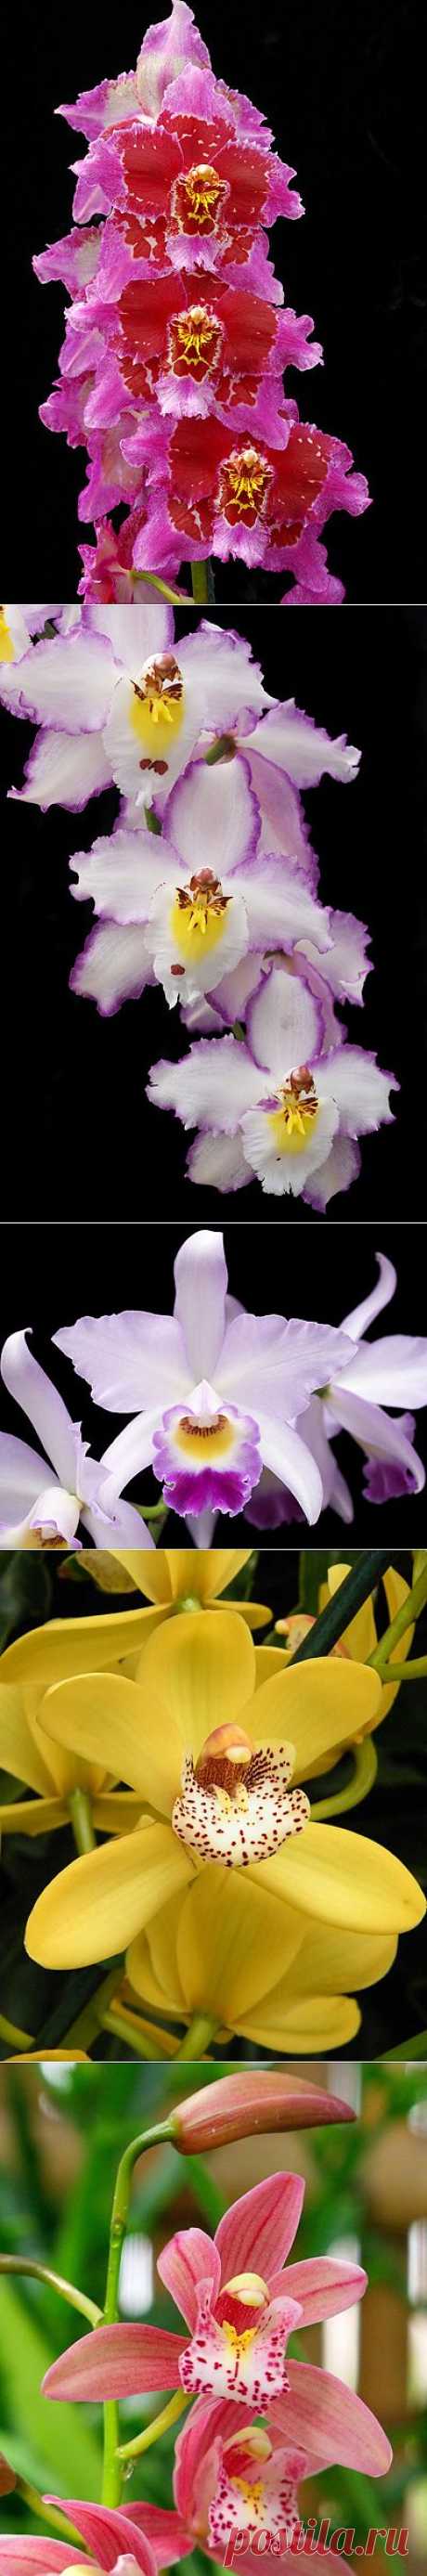 Орхидеи - красивые фото и картинки